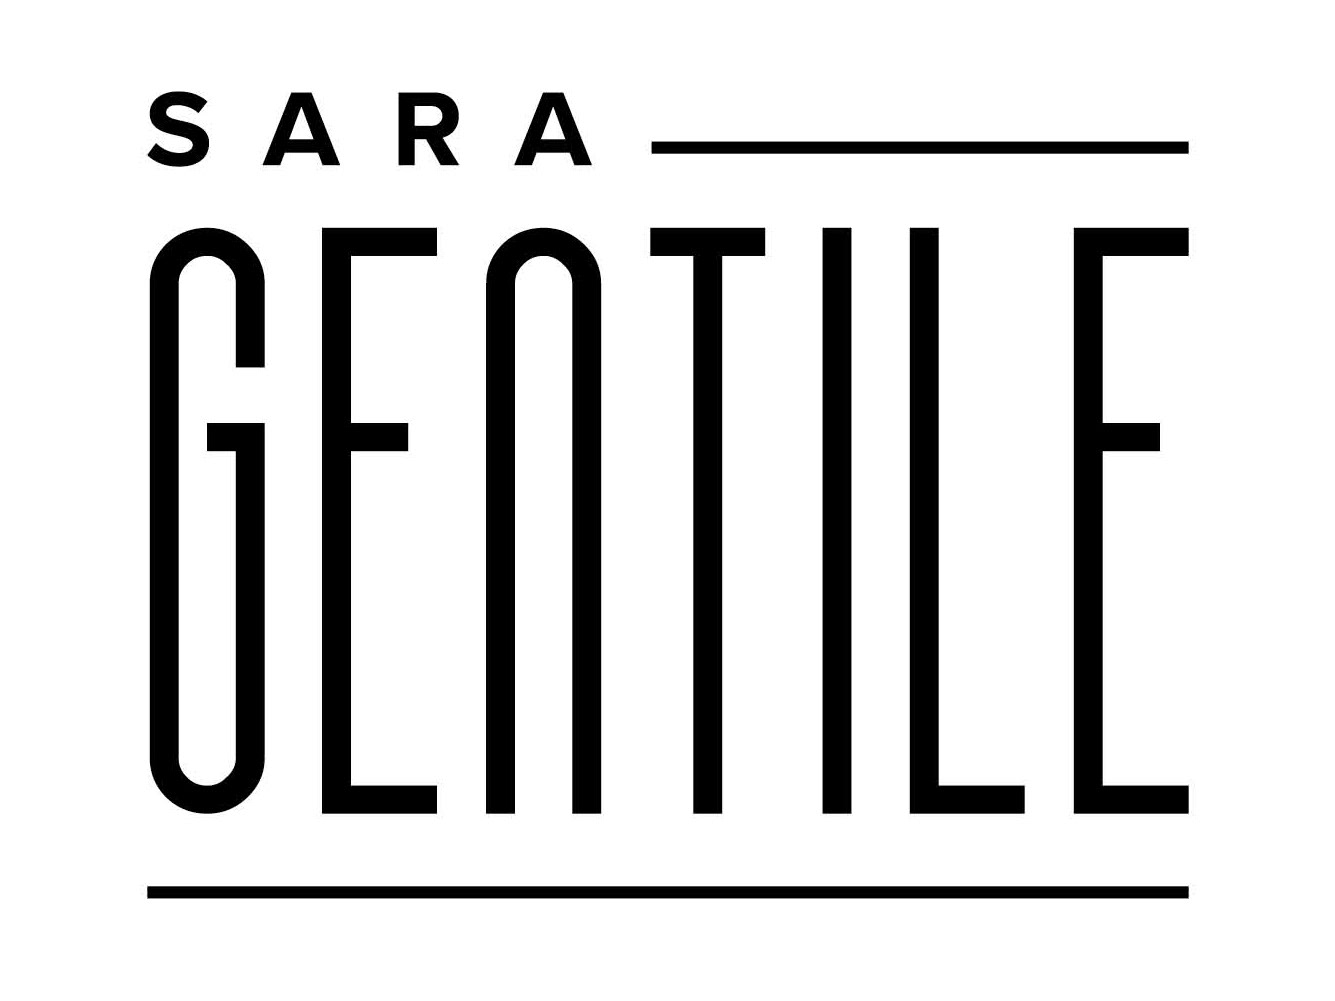 Sara Gentile